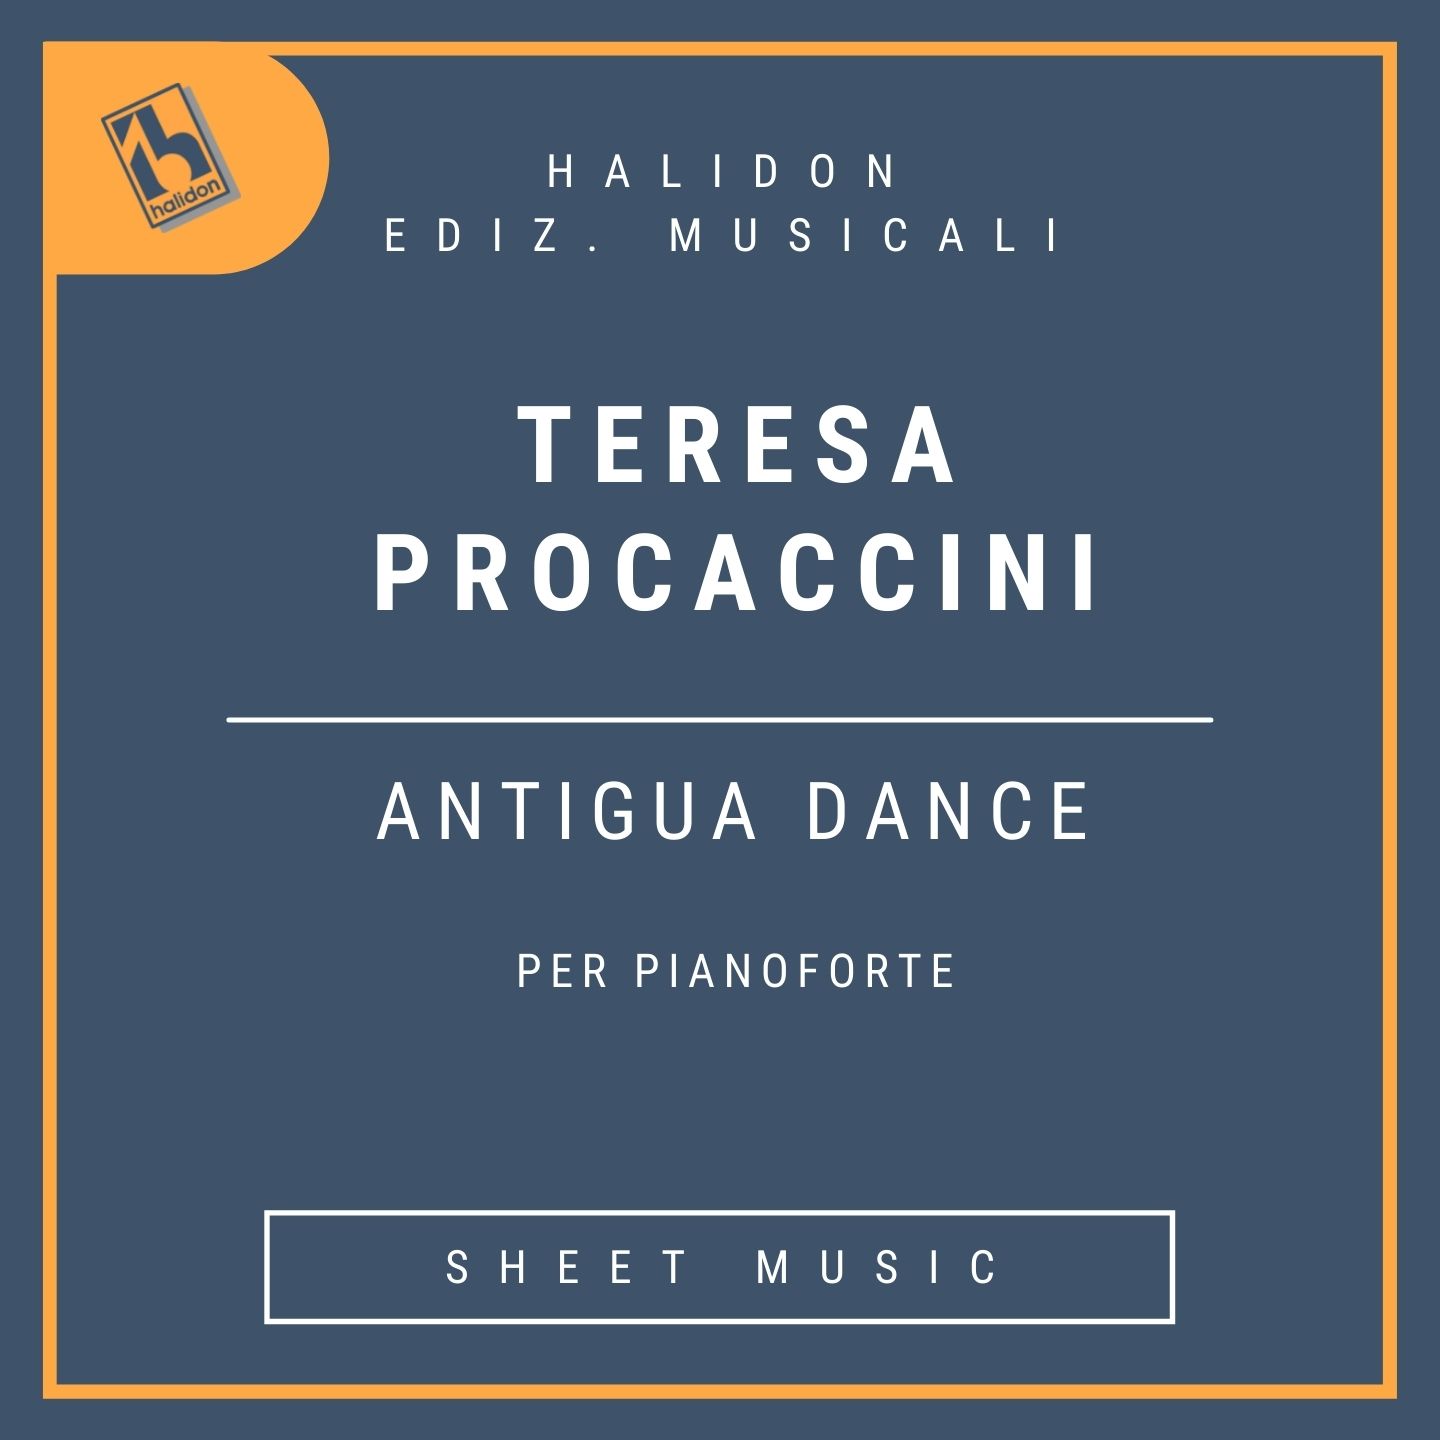 Teresa Procaccini - Antigua dance